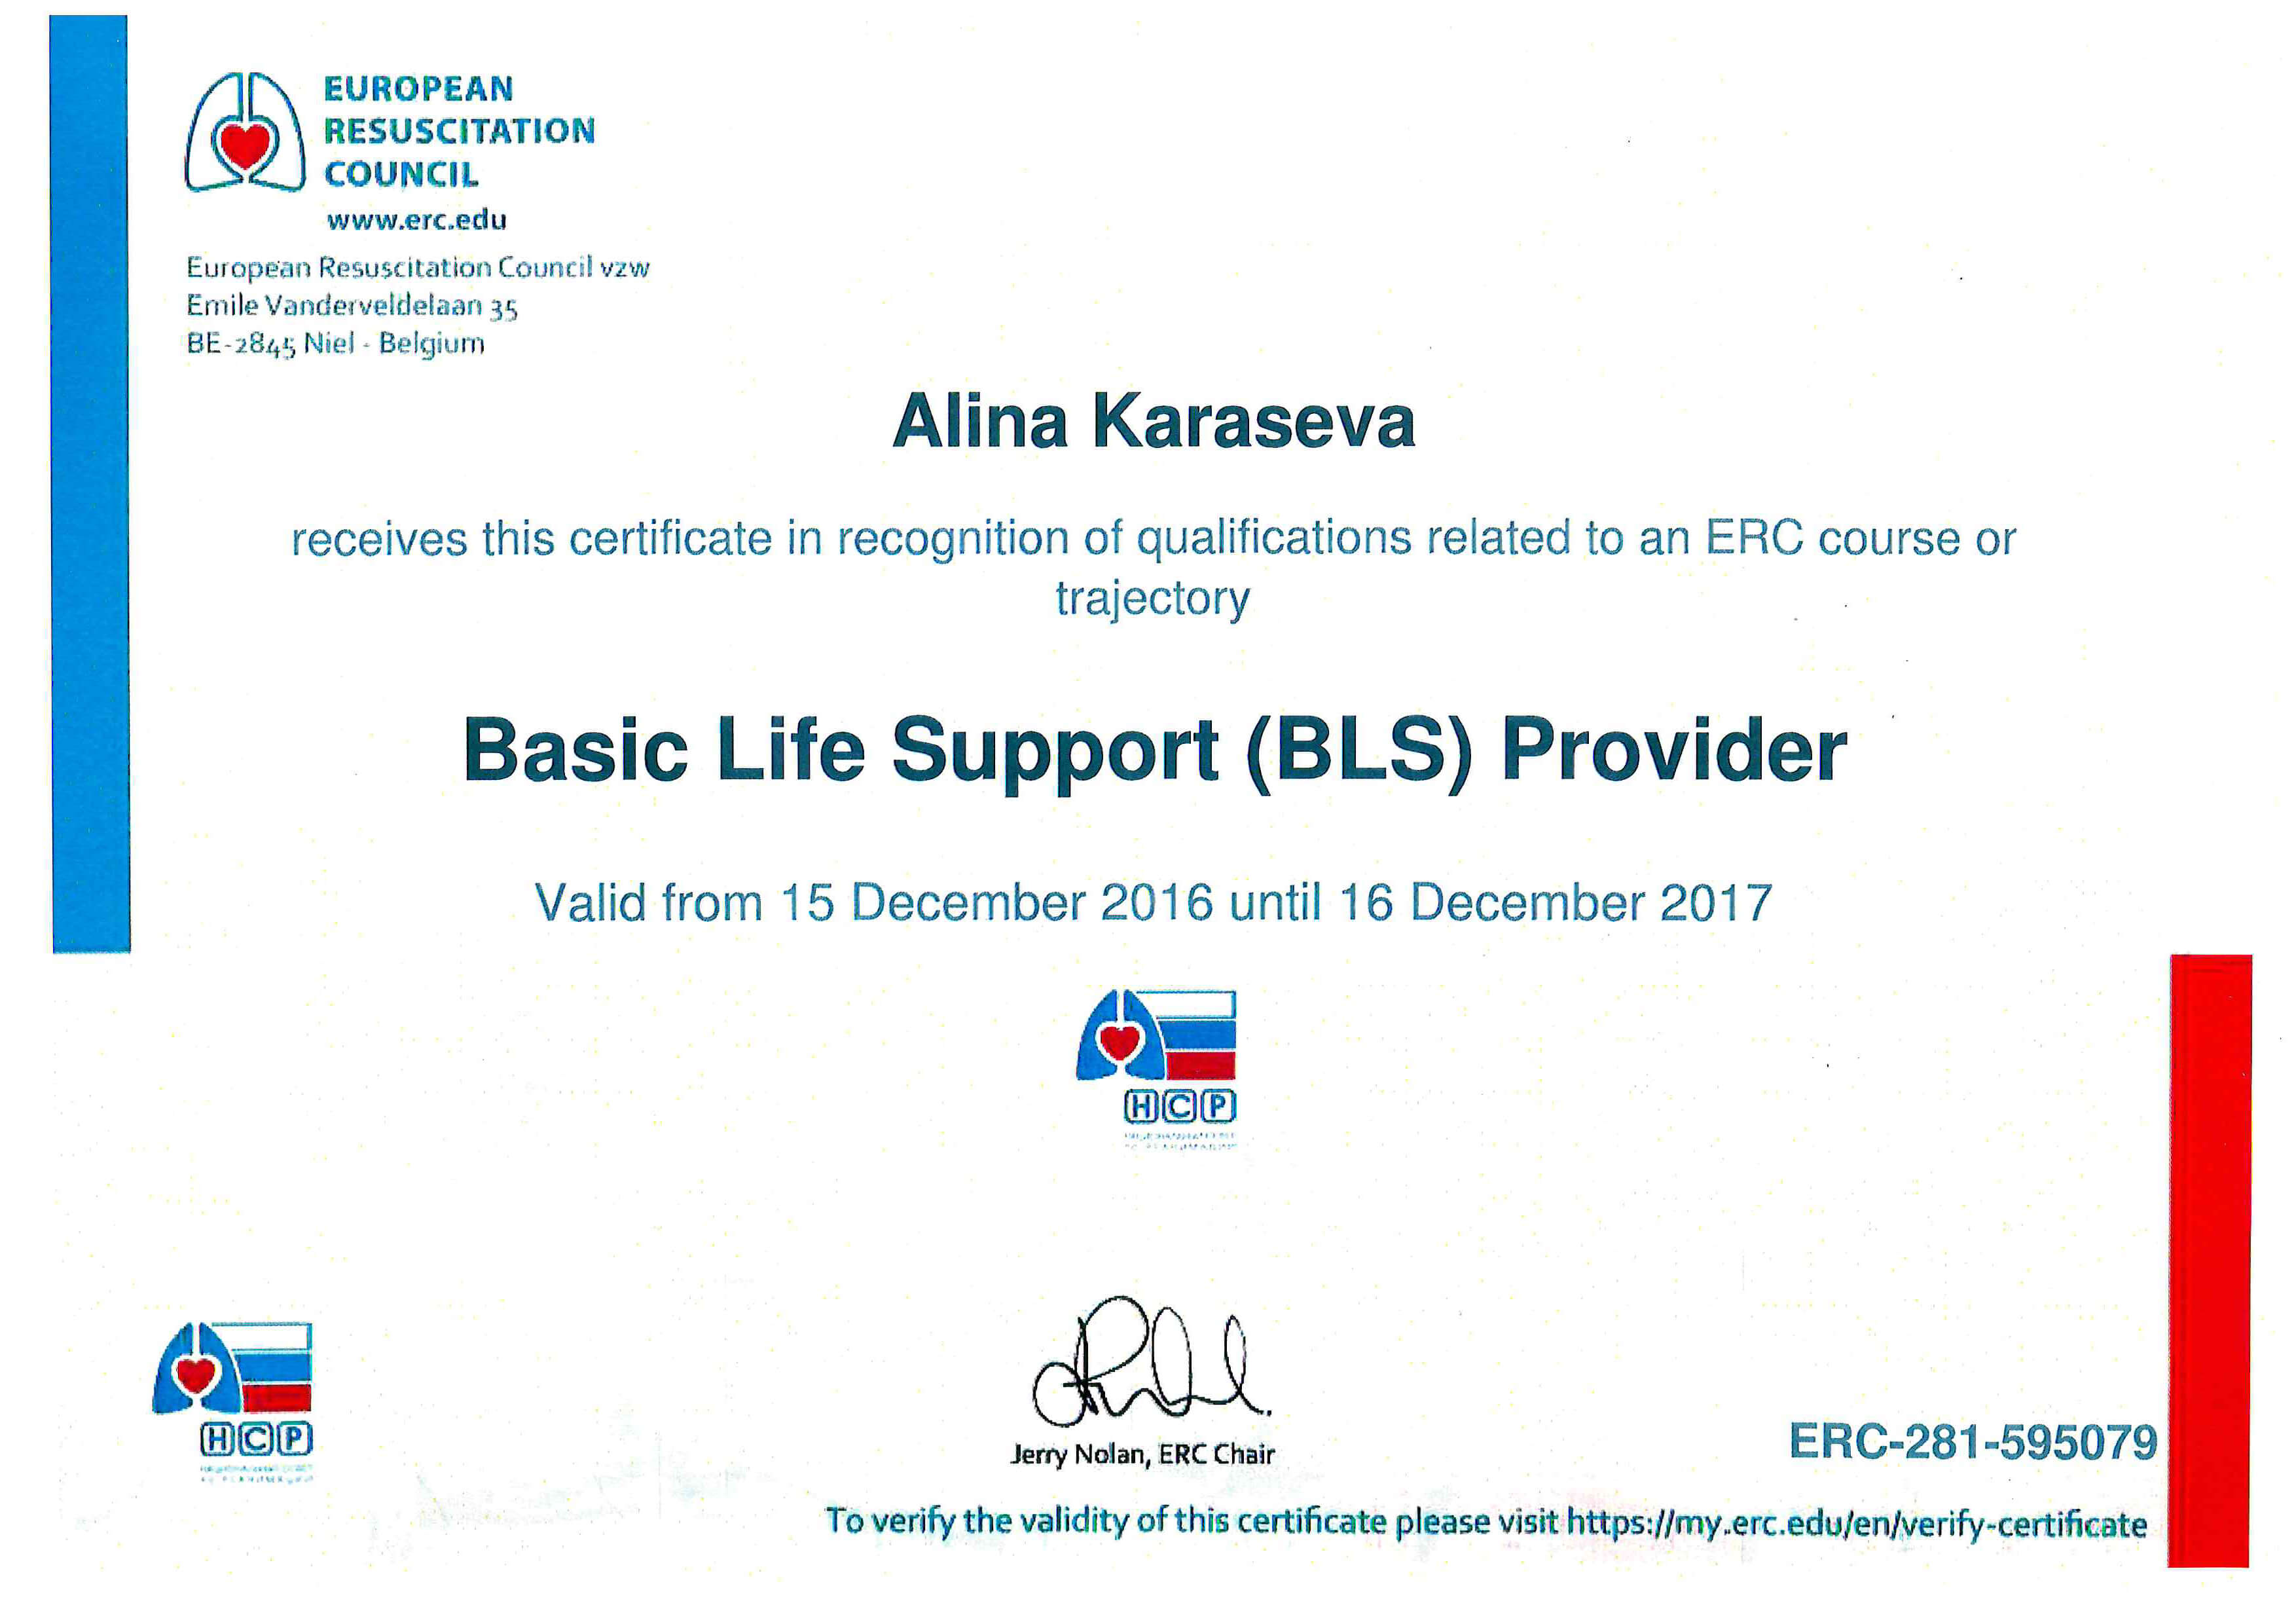 Сертификат 1 получил Карасева Алина